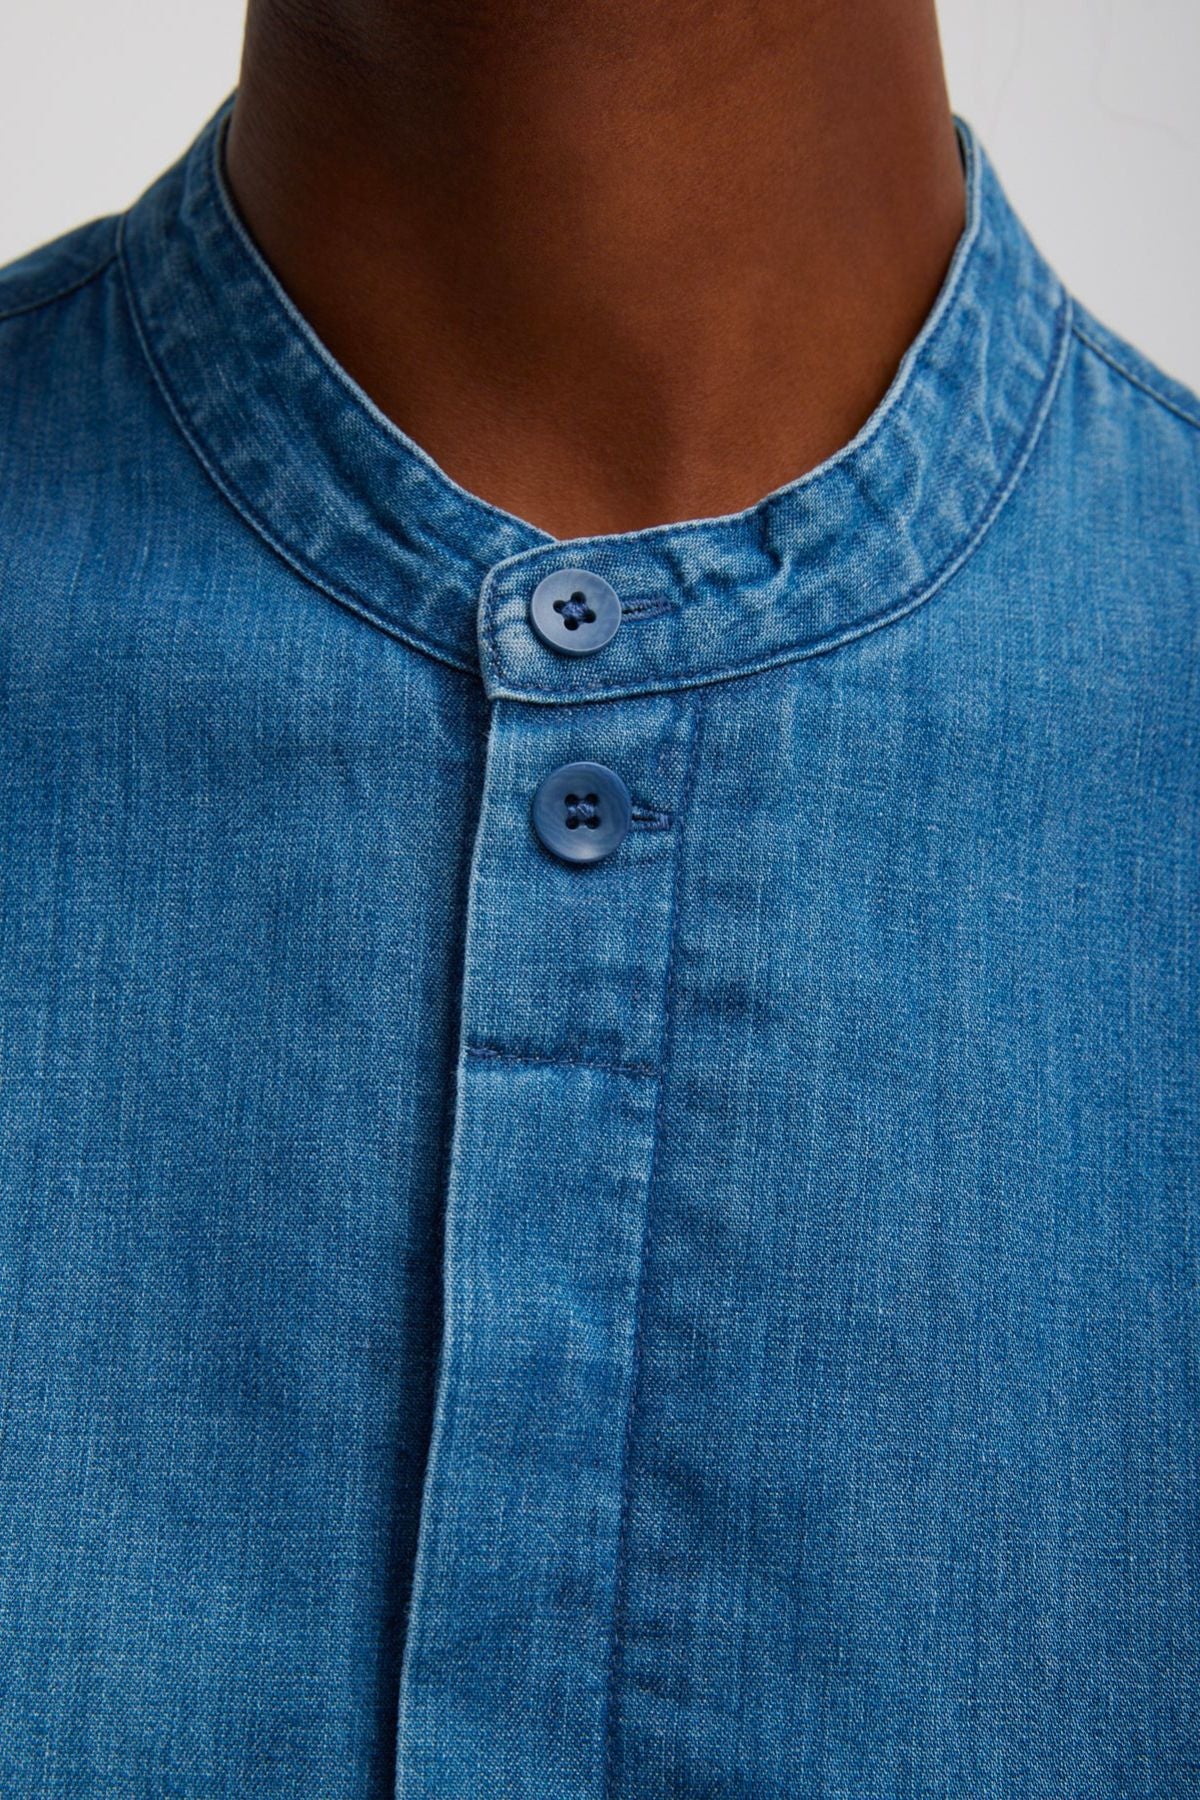 Tibi Lightweight Stone Wash Denim Tuxedo Shirt - Denim Blue